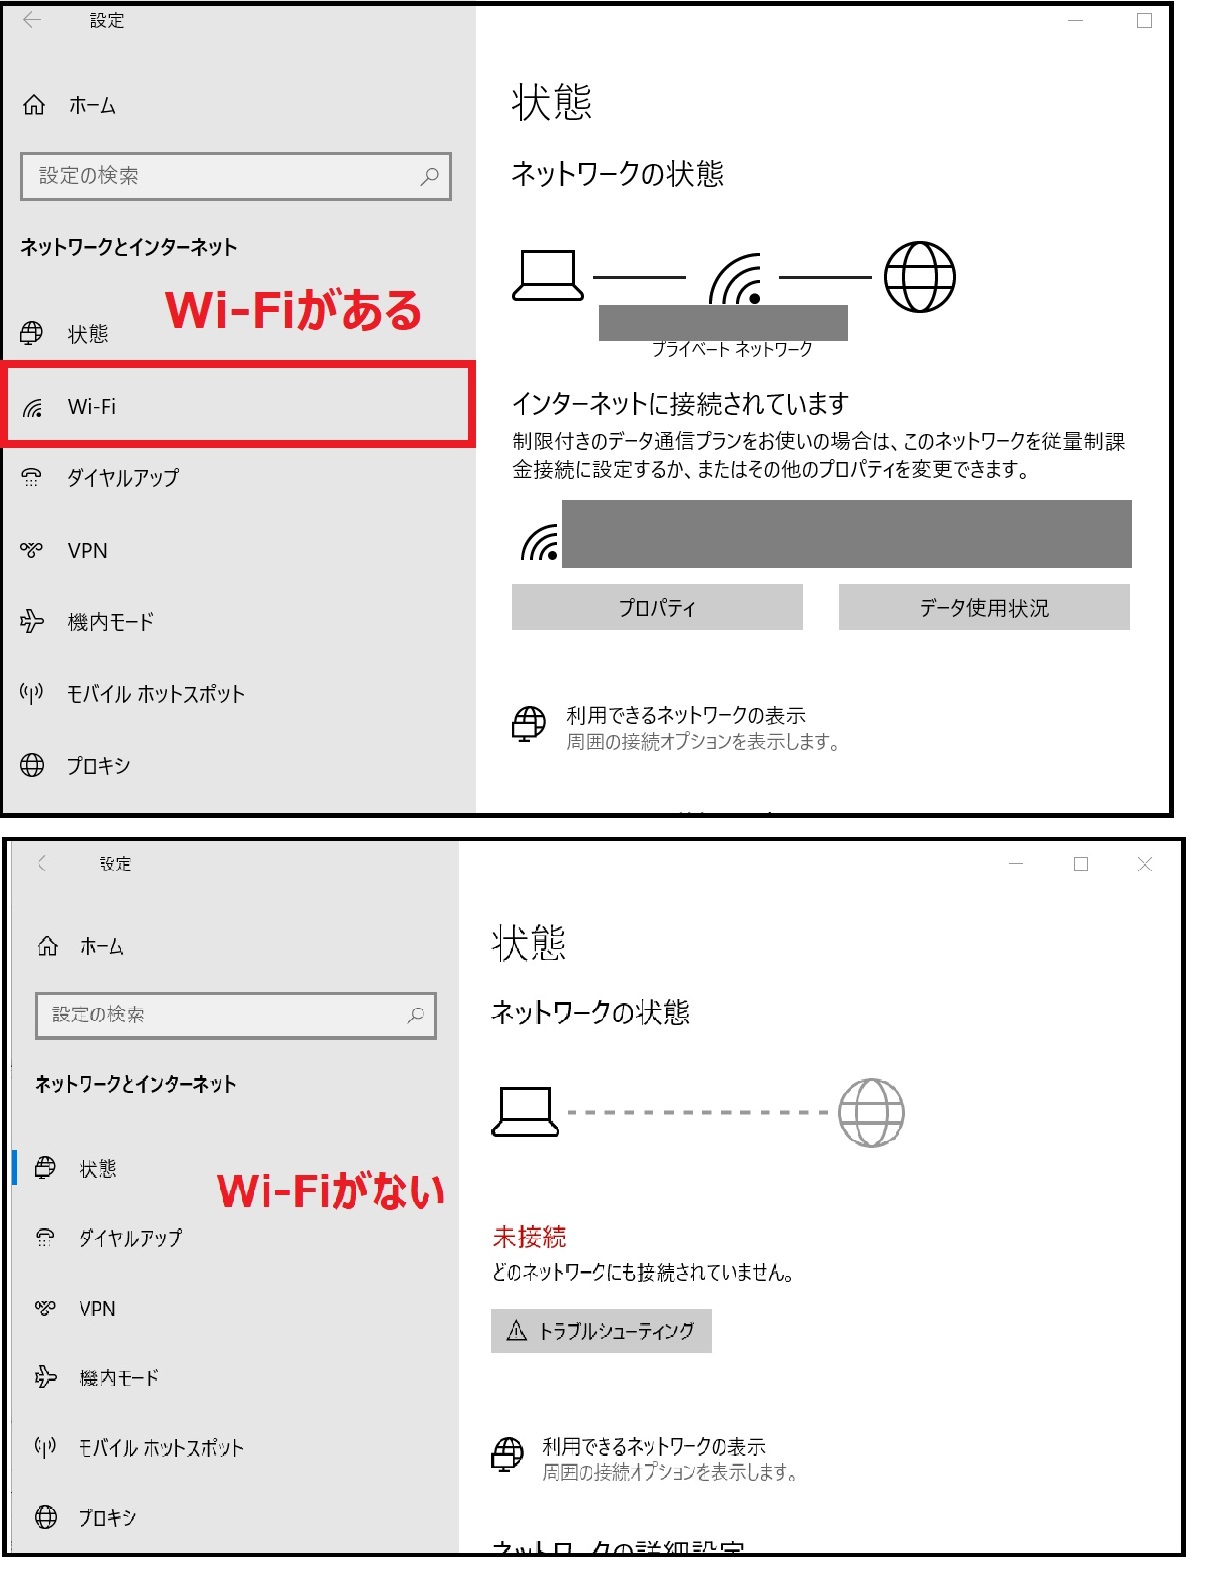 WindowsでWiFi(Wi-Fi)が表示されない場合の対処法